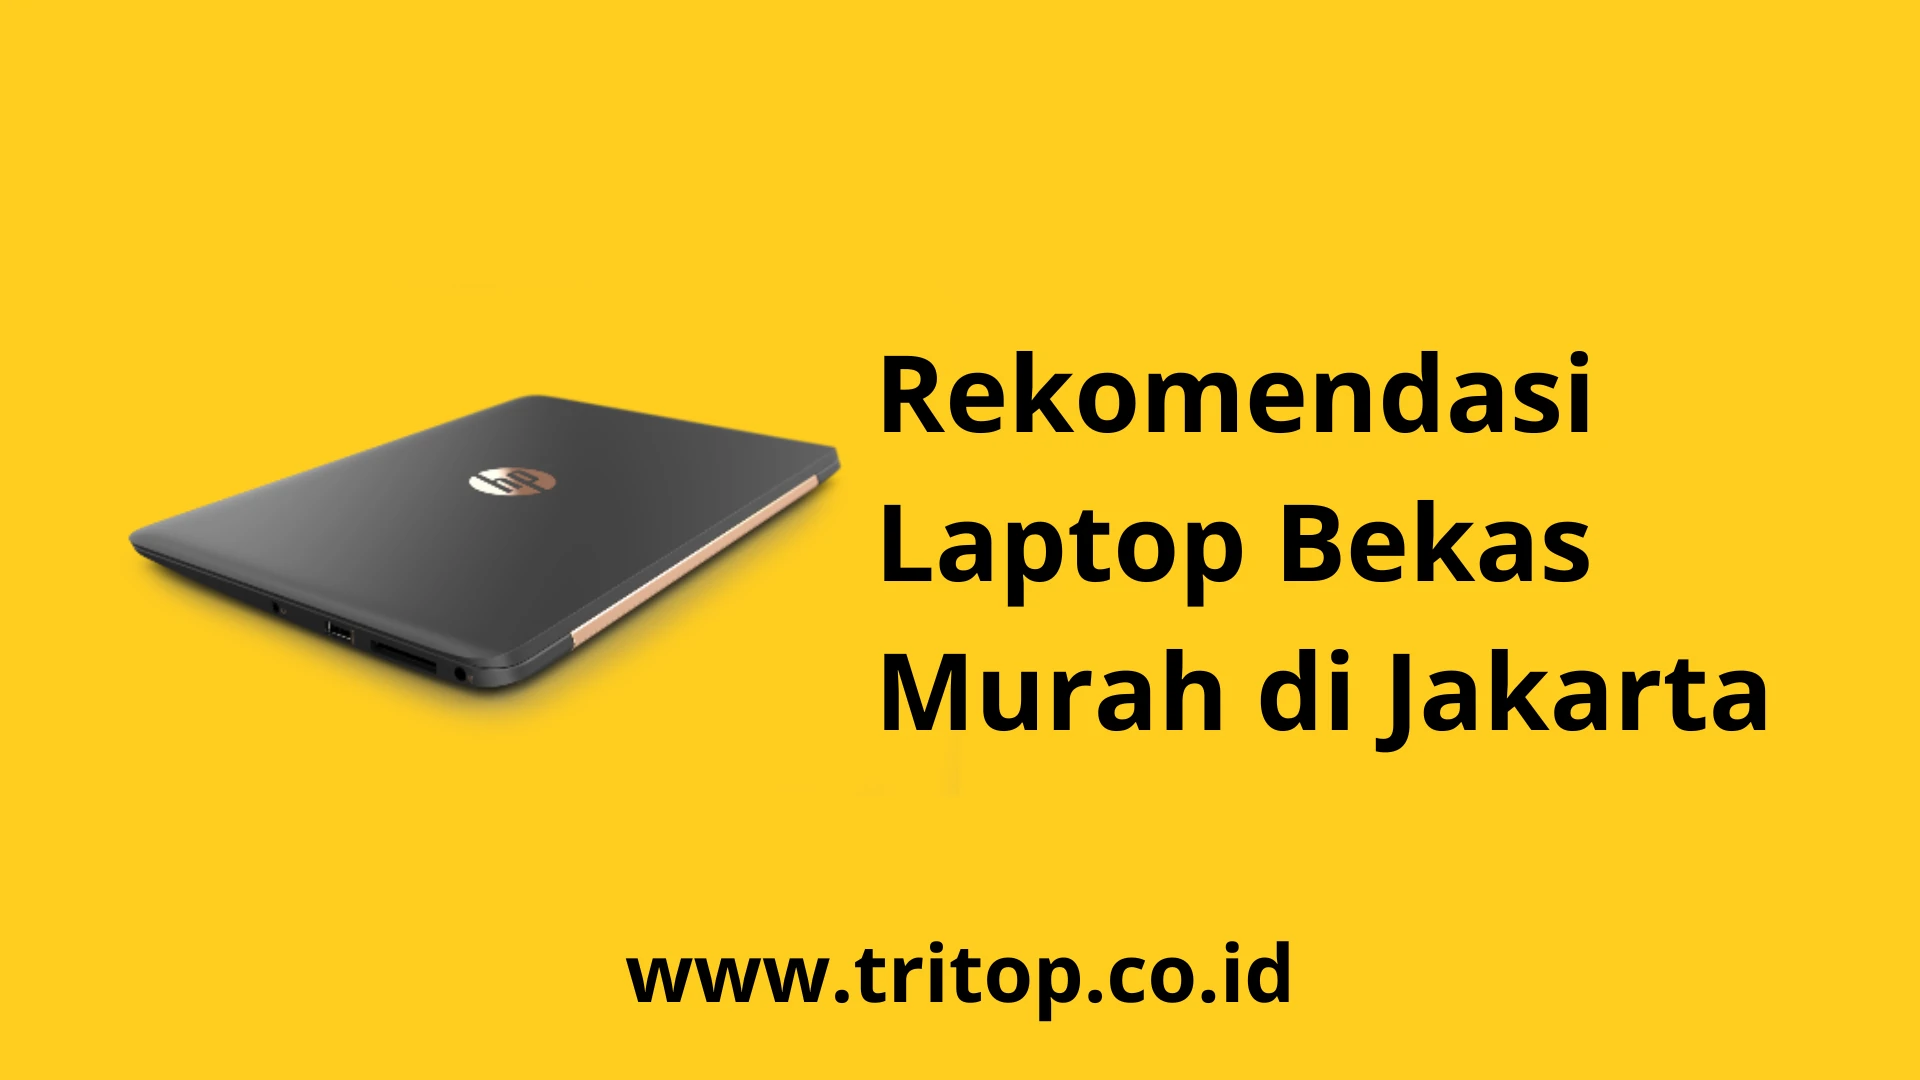 Laptop Bekas Murah Jakarta Tritop.co.id